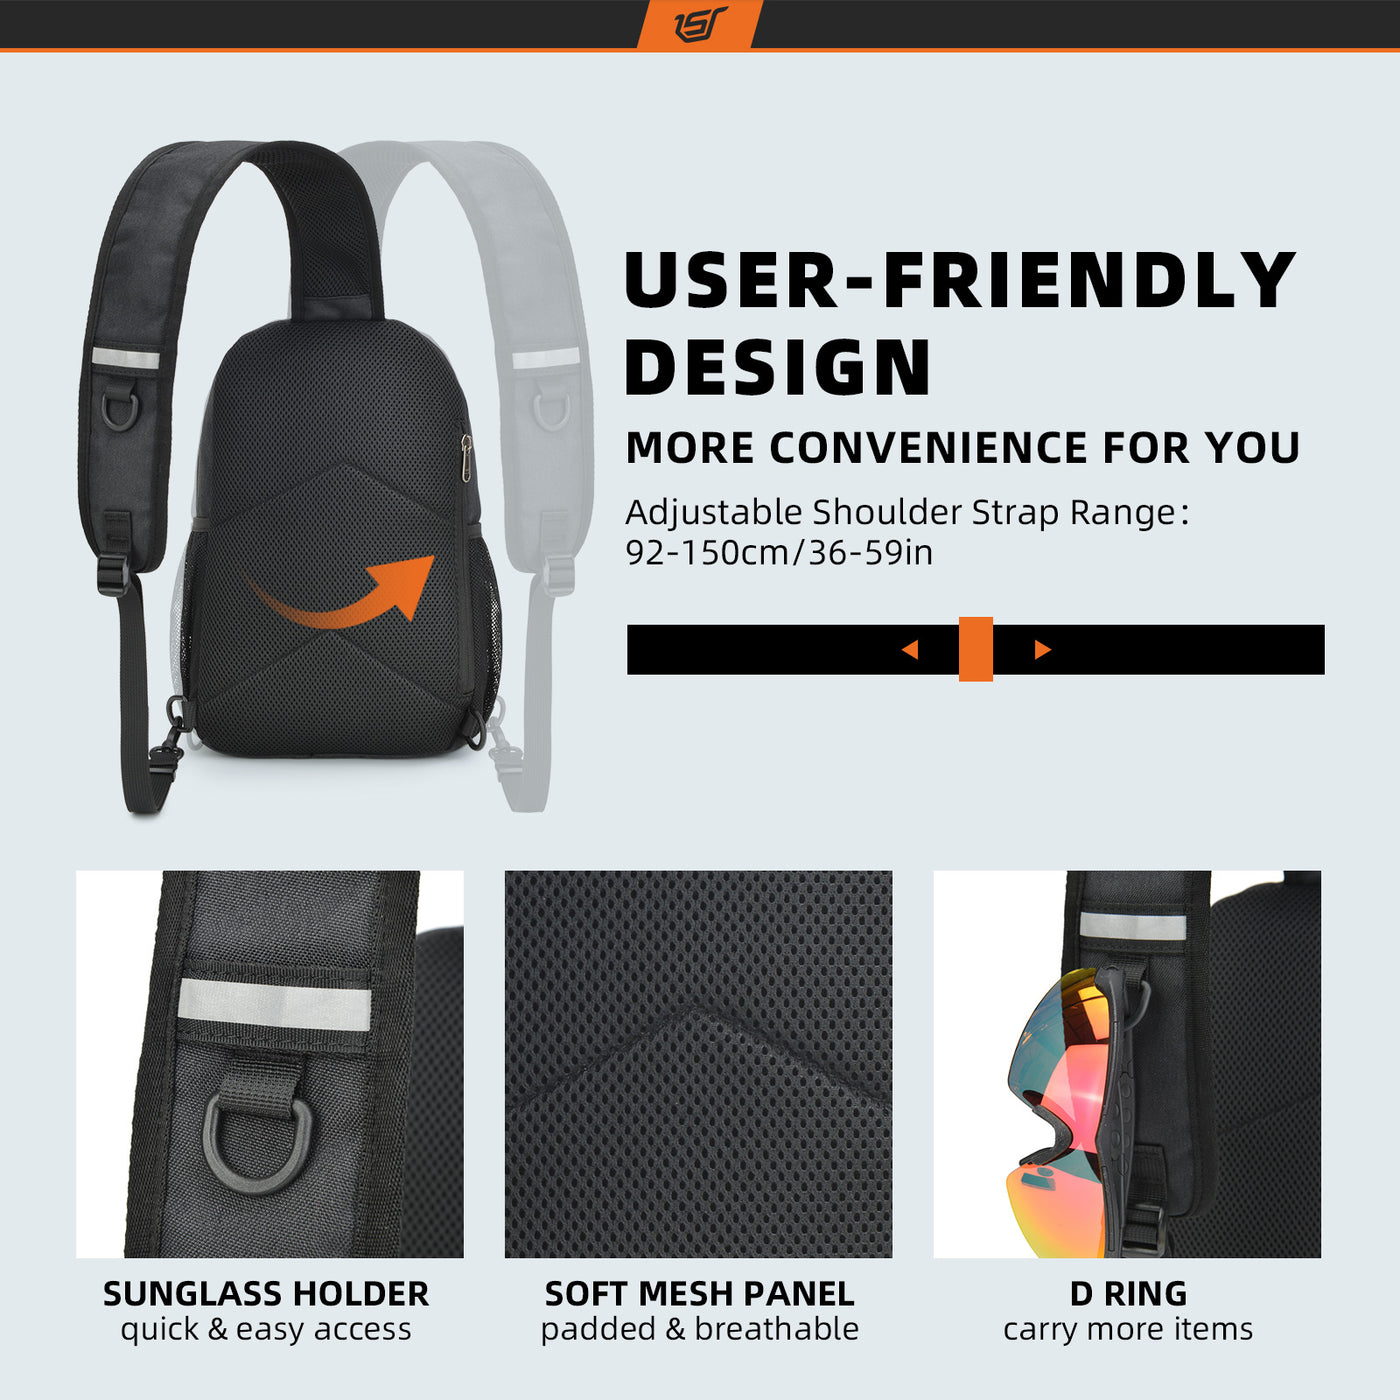 SKYSPER Urban X8 - Sling Bag Fashion Crossbody Daypack 8L Chest Bag